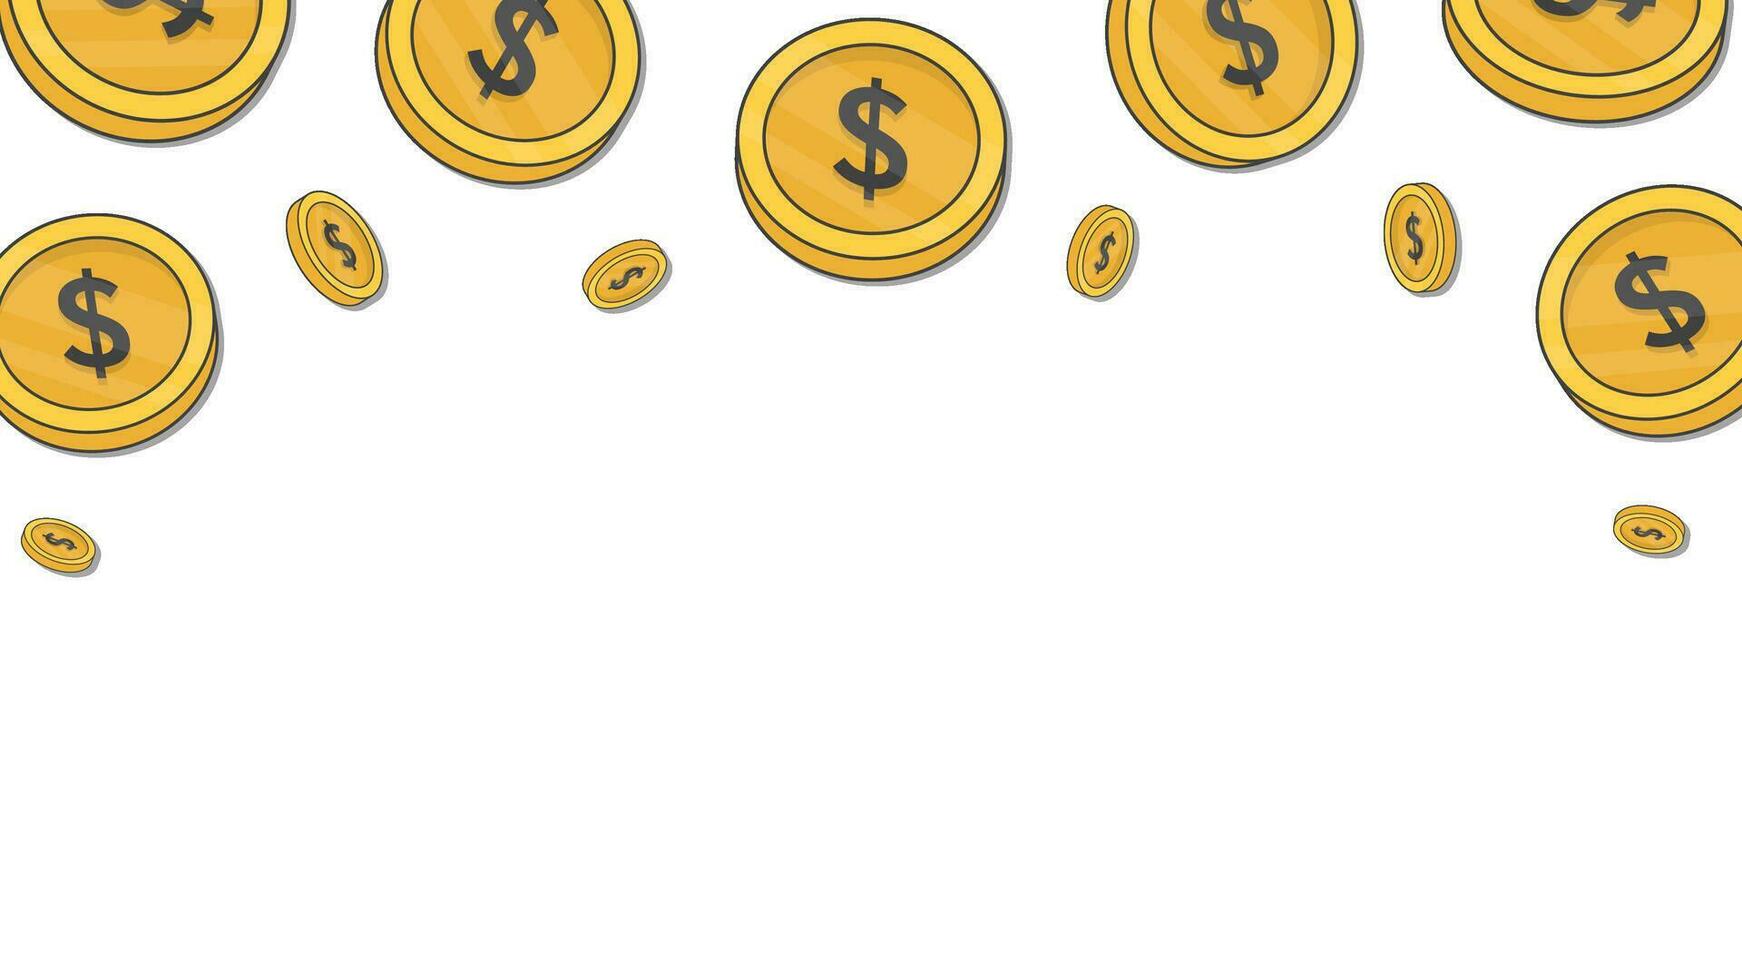 Money Background Design Template. Gold Coins Cartoon Vector Illustration. Business